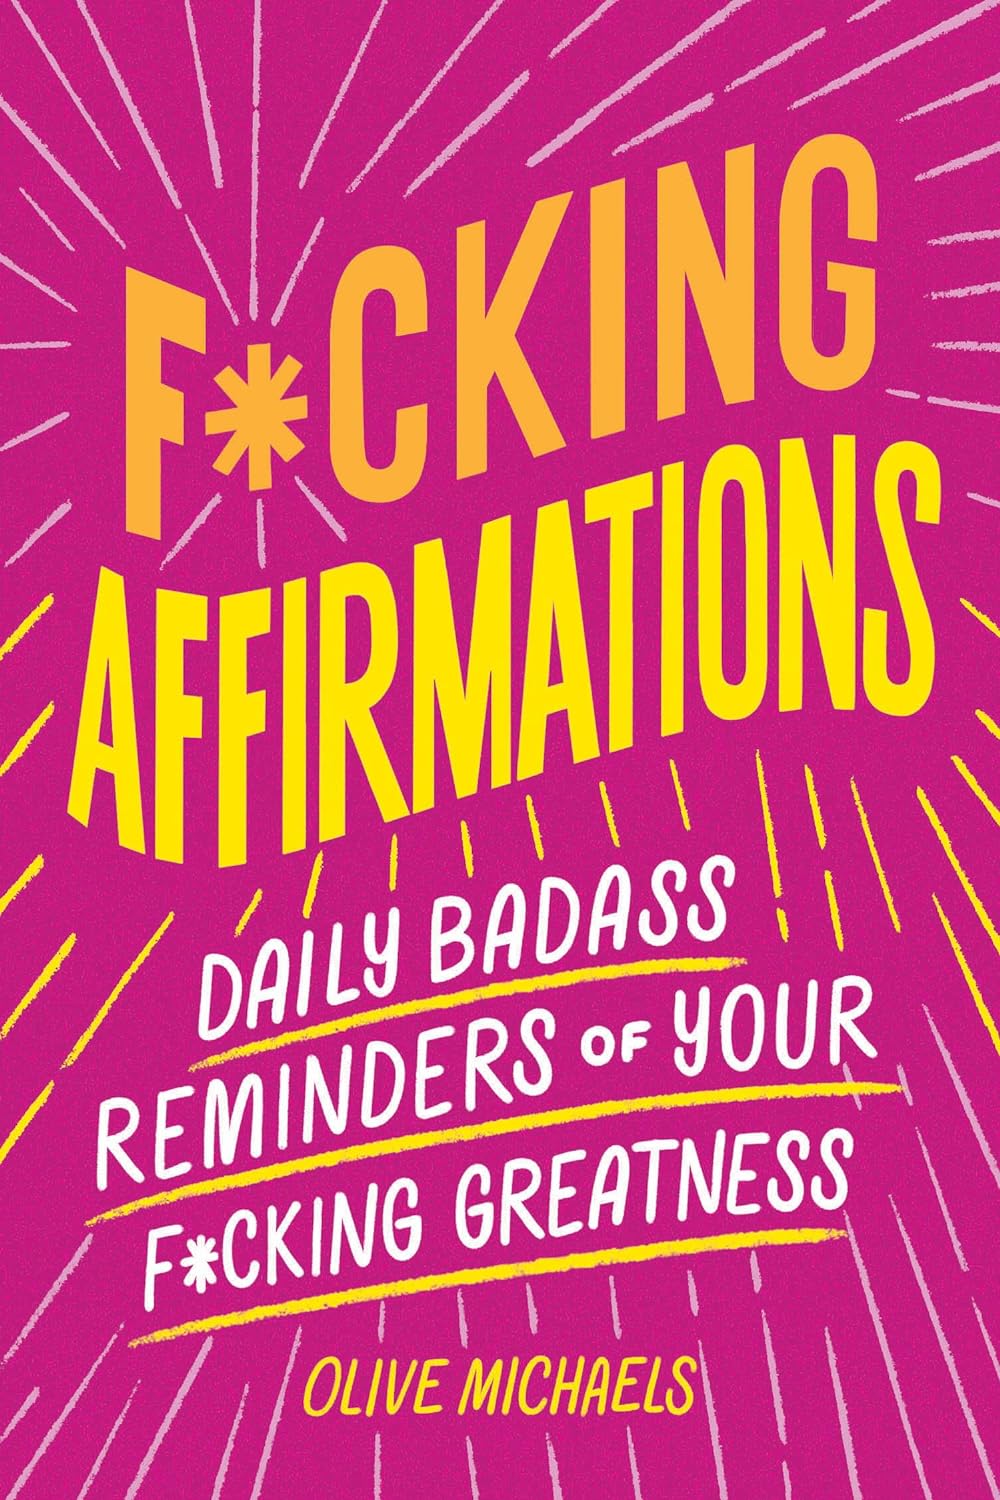 Fcking Affirmations Daily Badass Reminders of Your Fcking Greatness - SureShot Books Publishing LLC